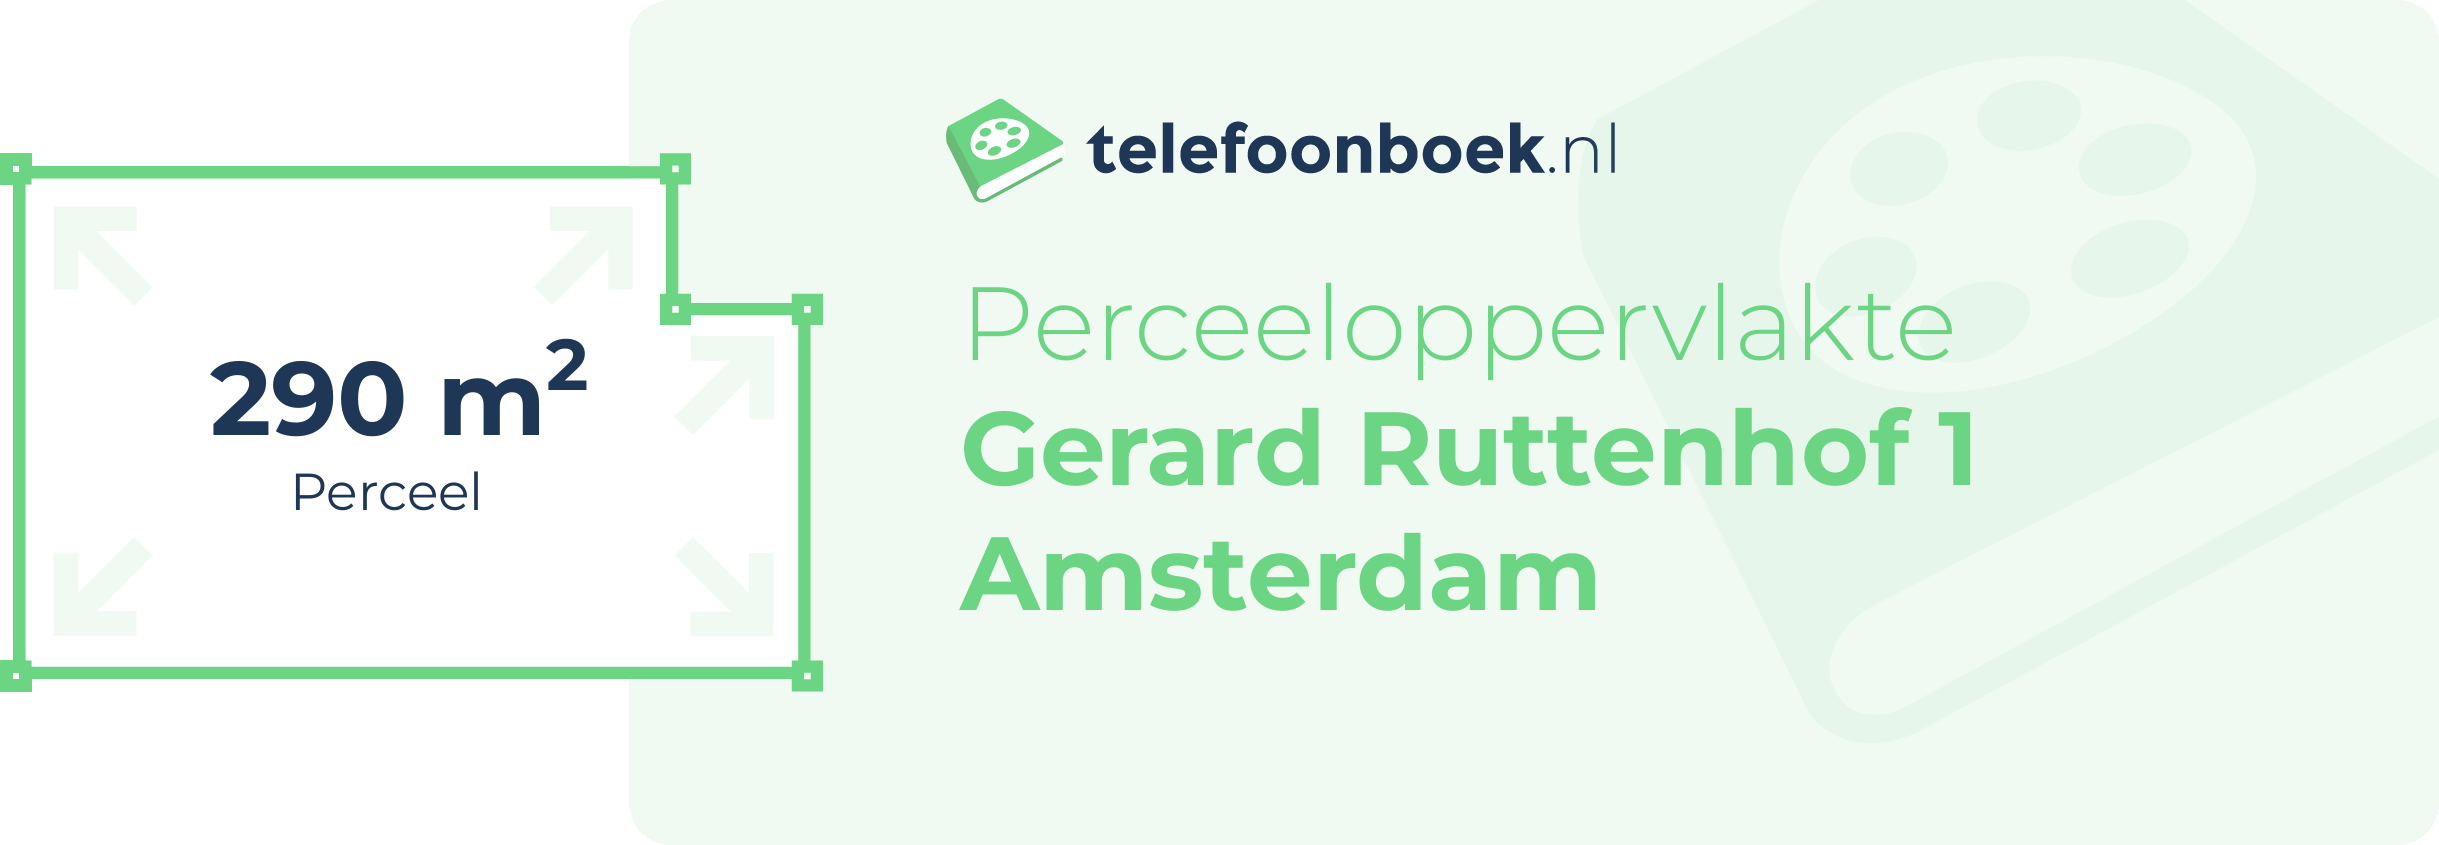 Perceeloppervlakte Gerard Ruttenhof 1 Amsterdam